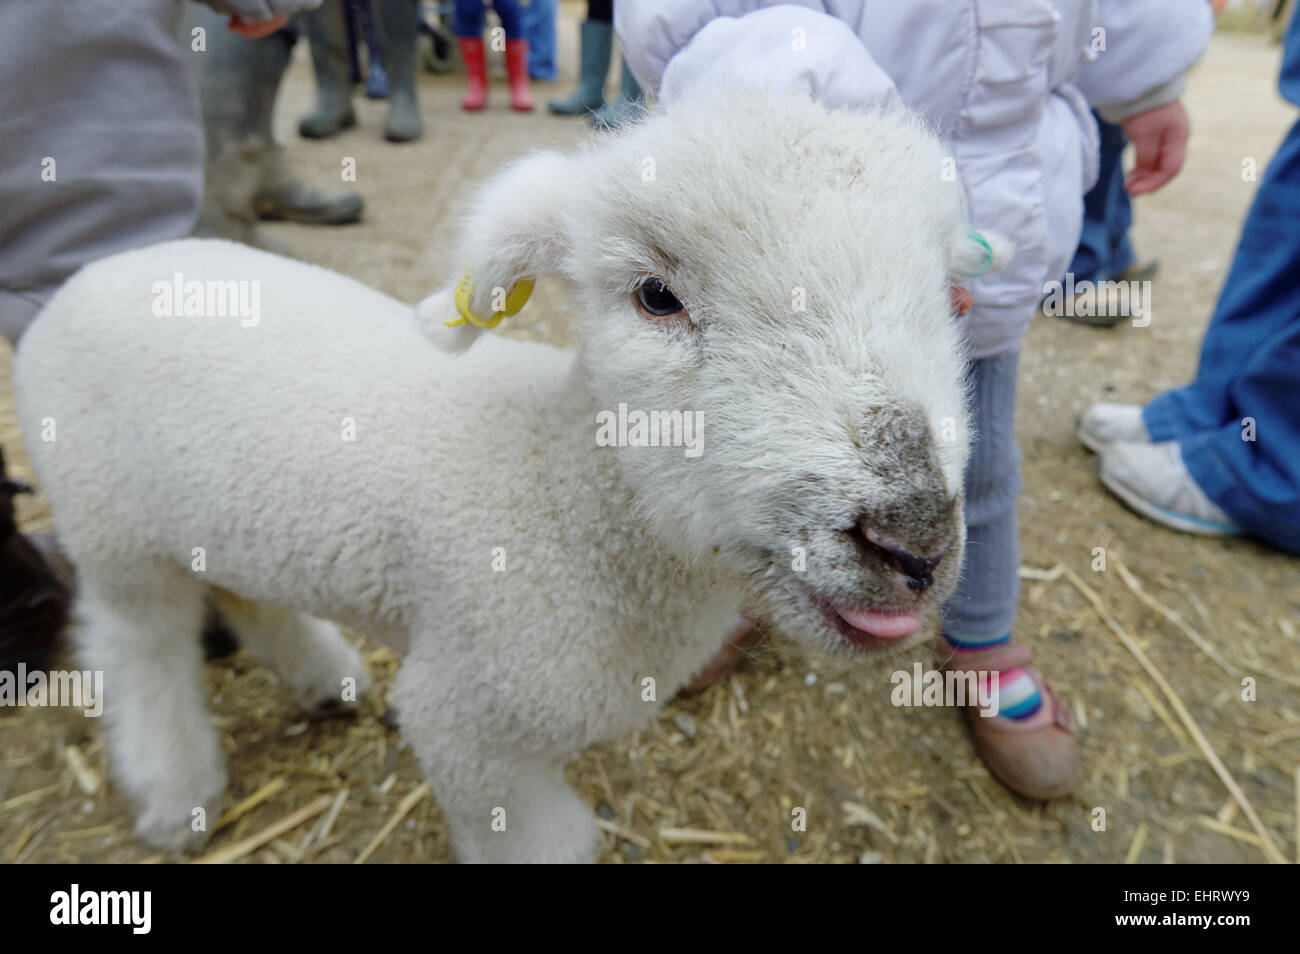 Lamb with tongue poking out cheekily Stock Photo